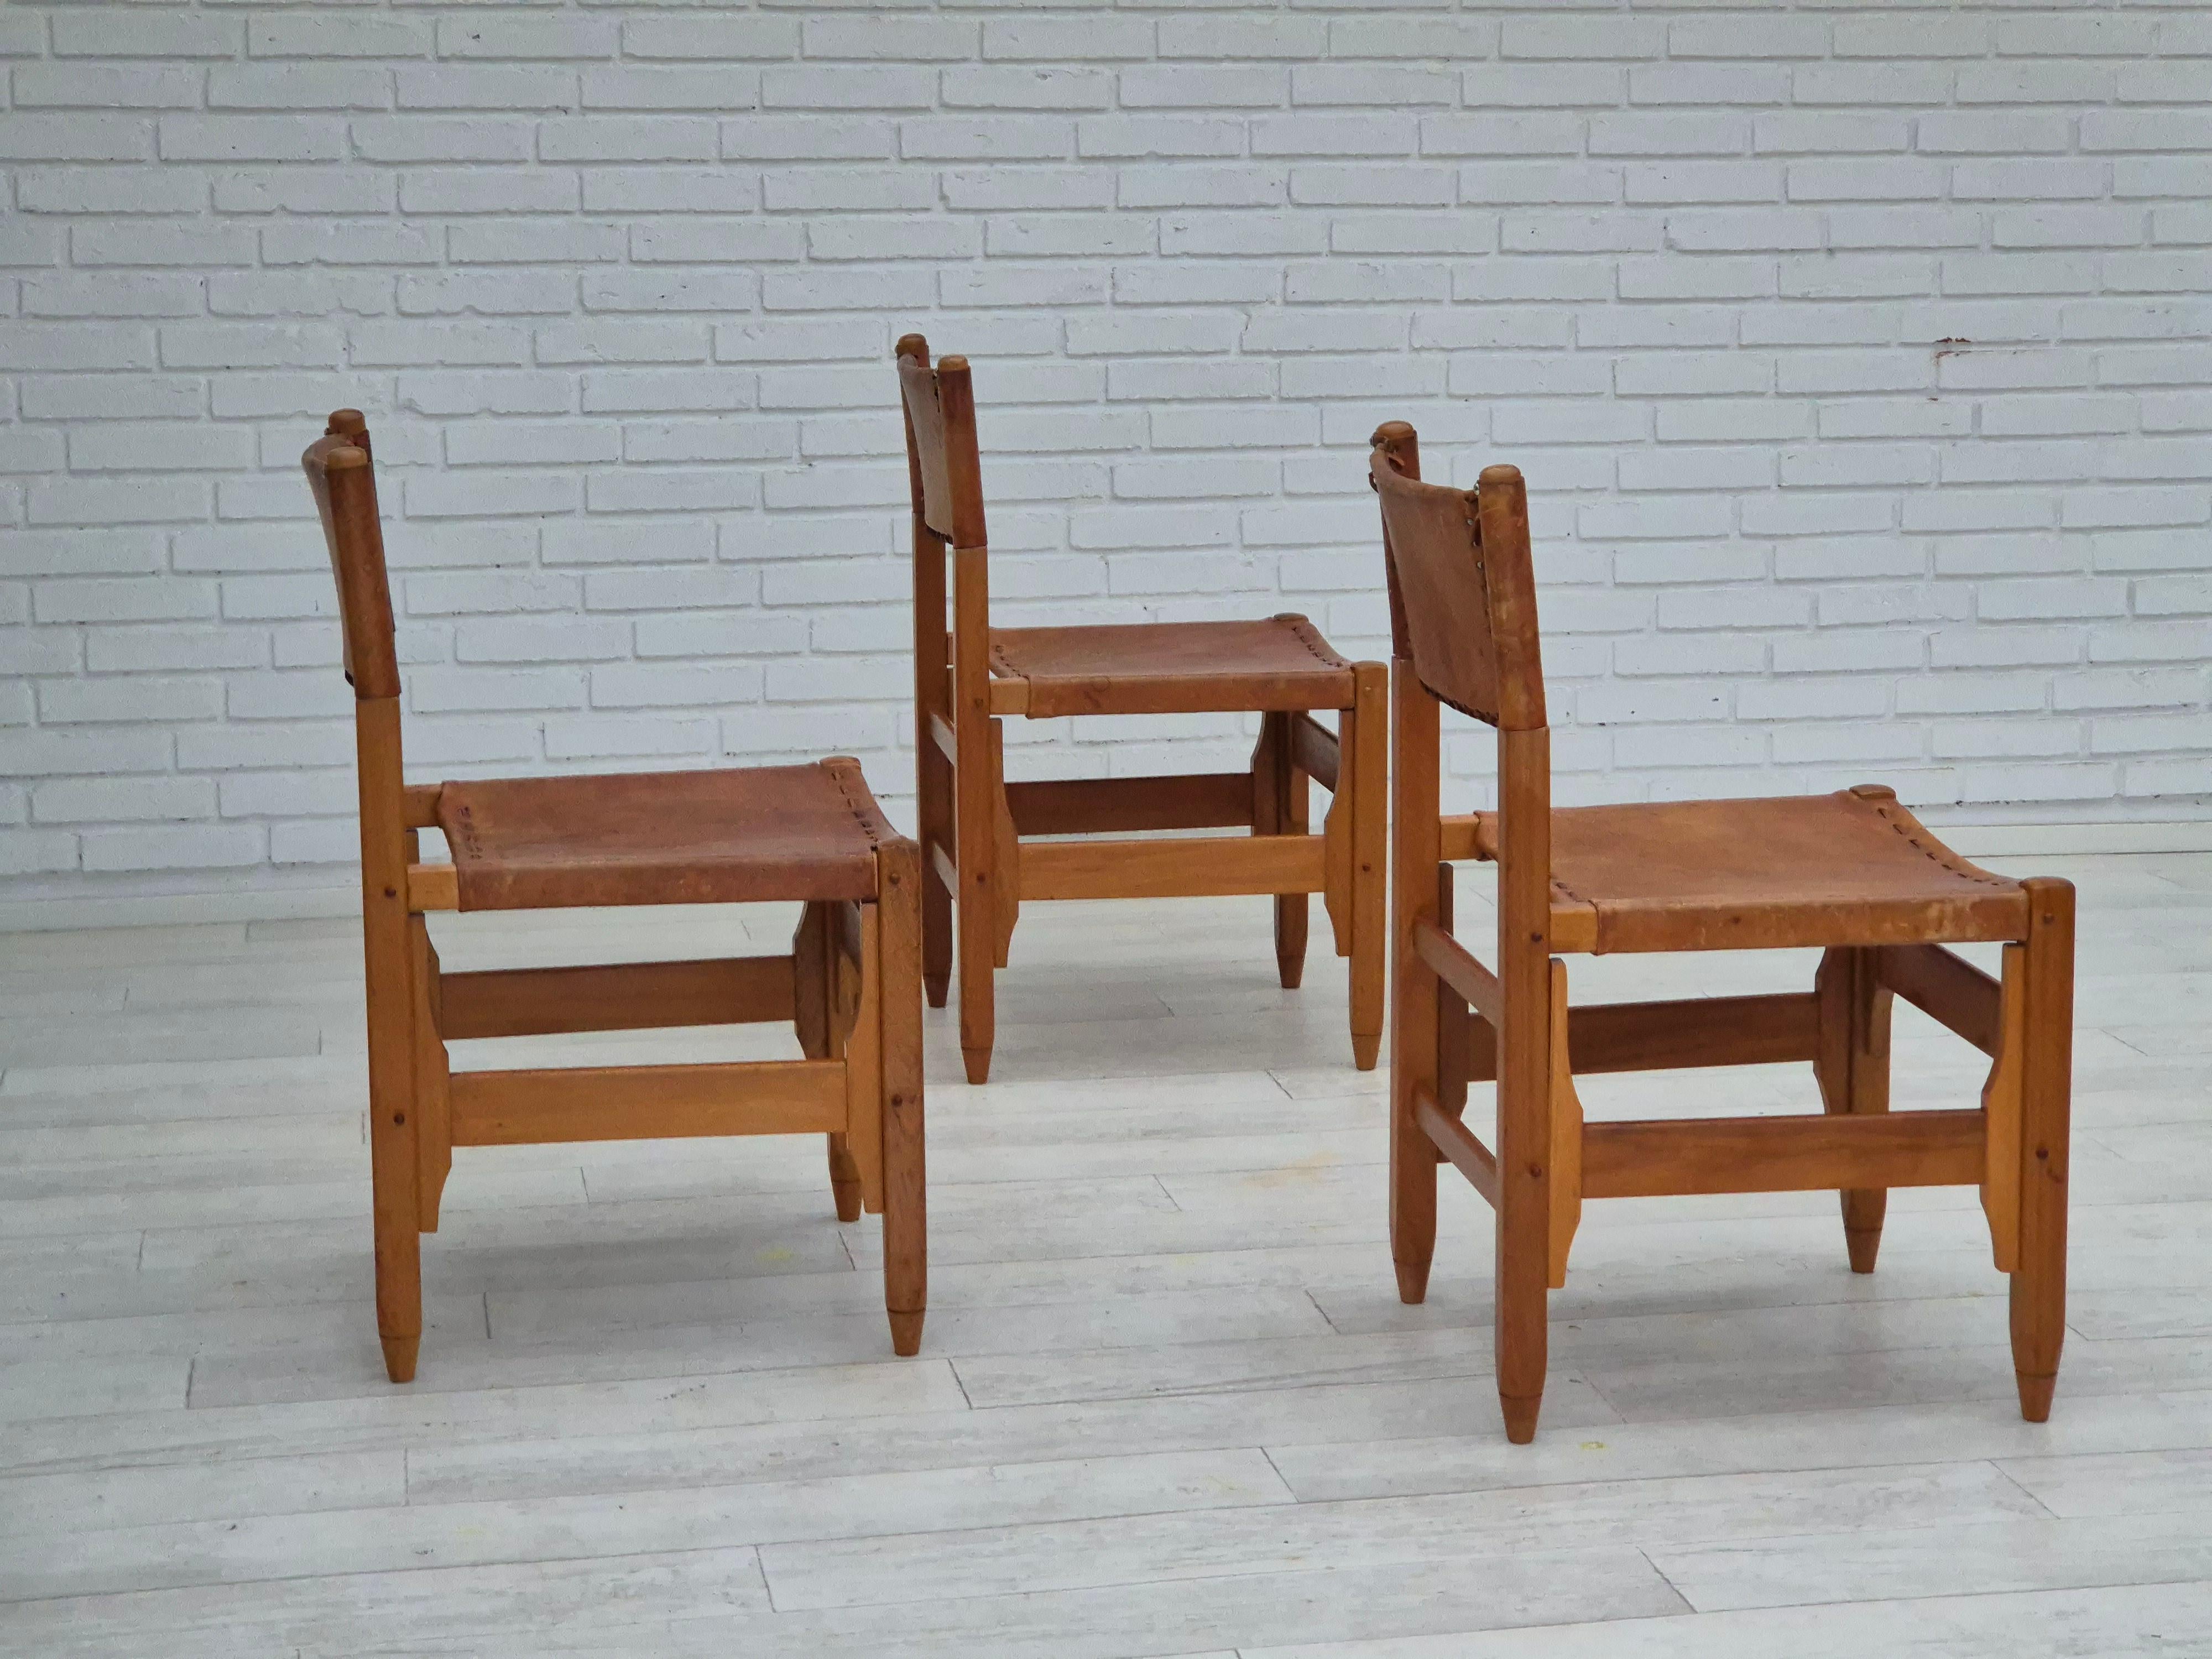 Colonial Revival 1960s, Werner Biermann design for Arte Sano, set of three chairs, original.